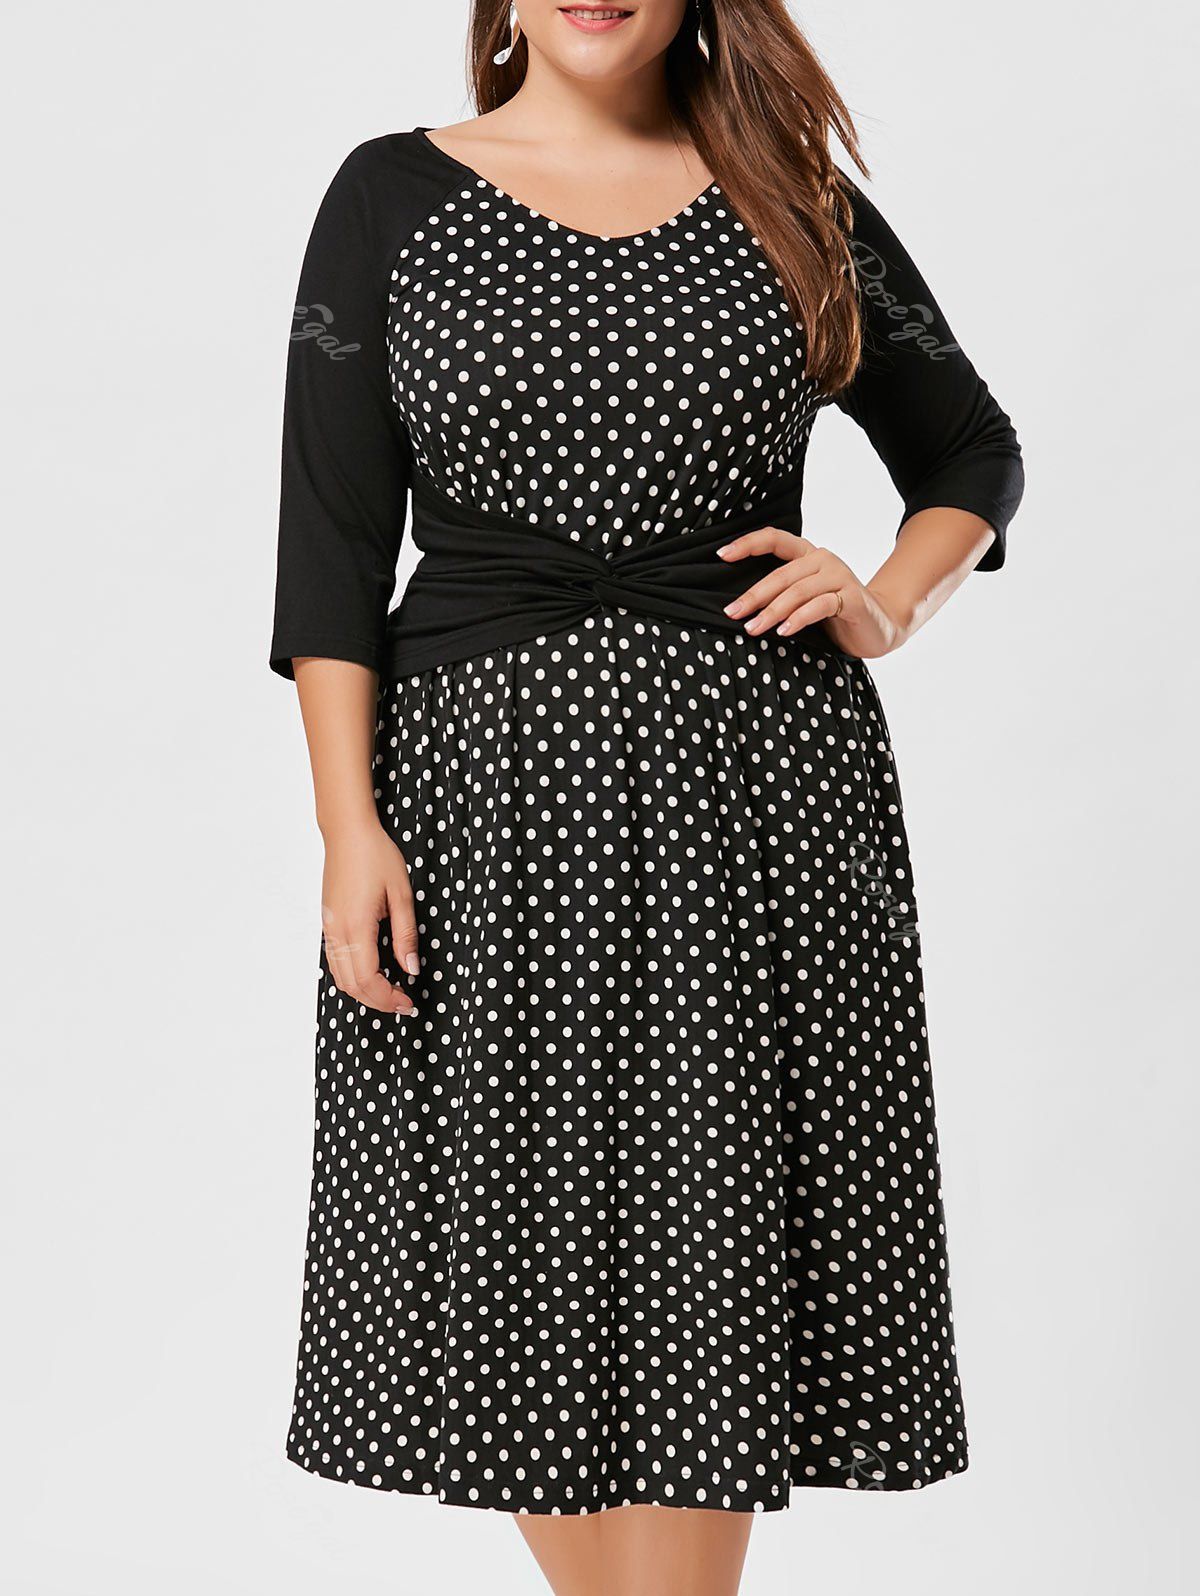 Black White 4xl High Waist Plus Size Polka Dot Dress | RoseGal.com